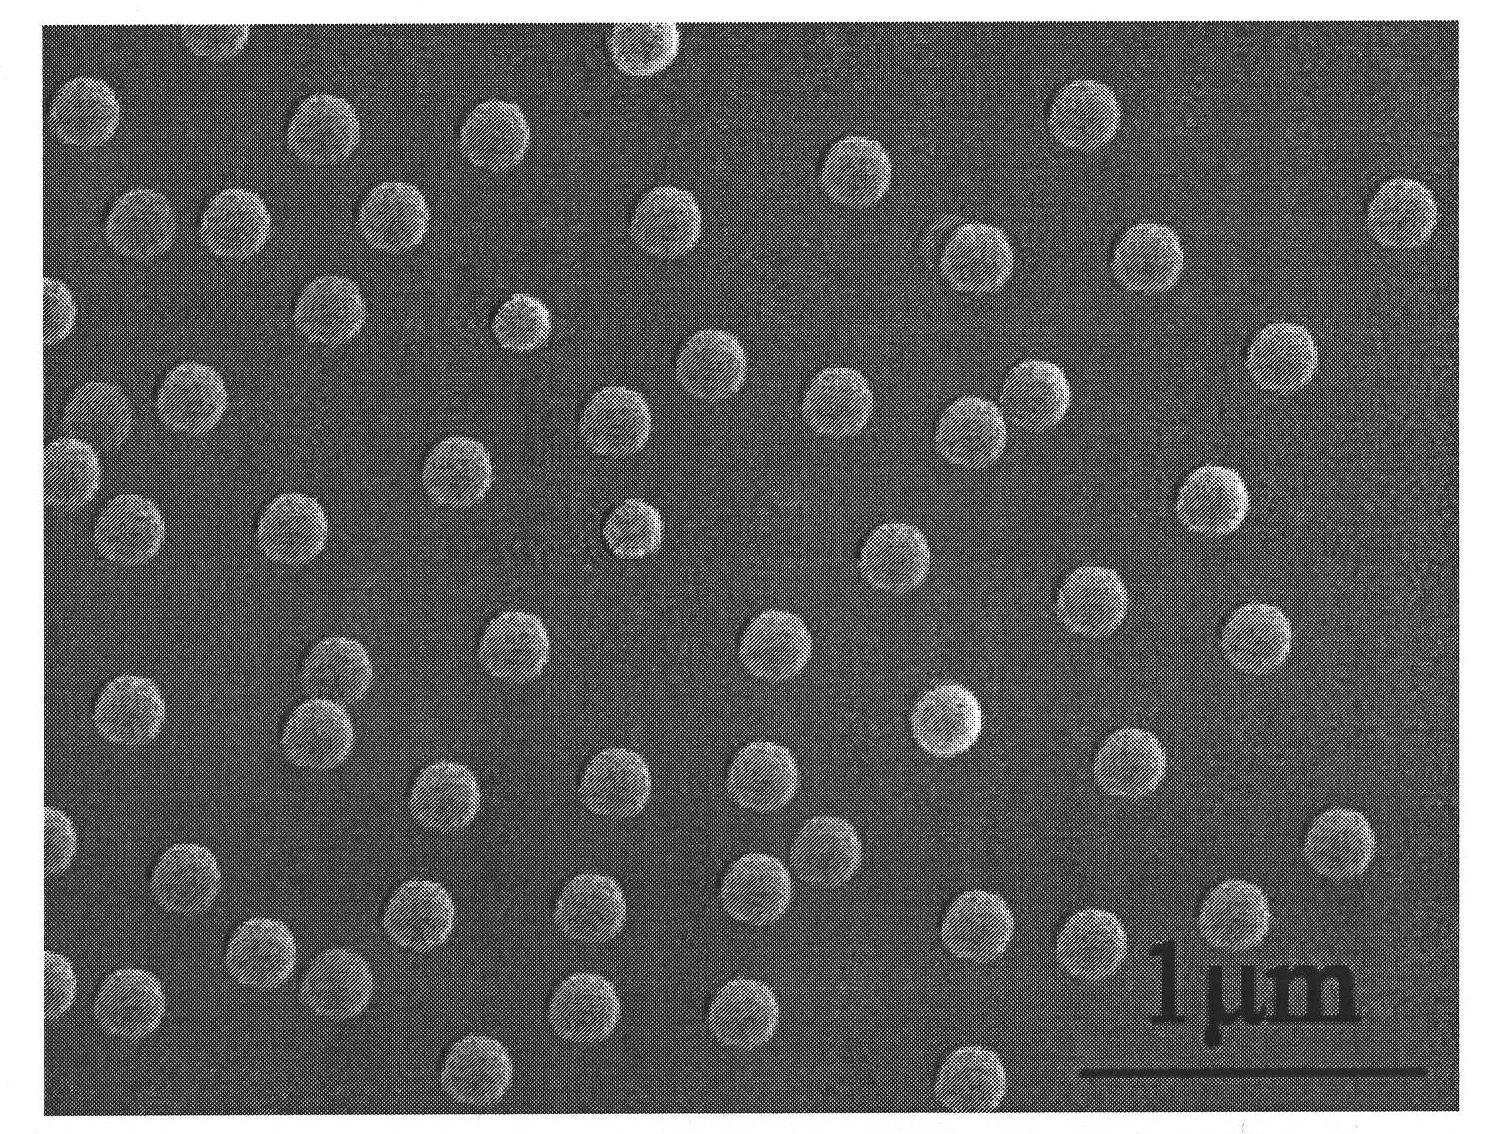 Method for preparing monodisperse nanosphere medicine carrier